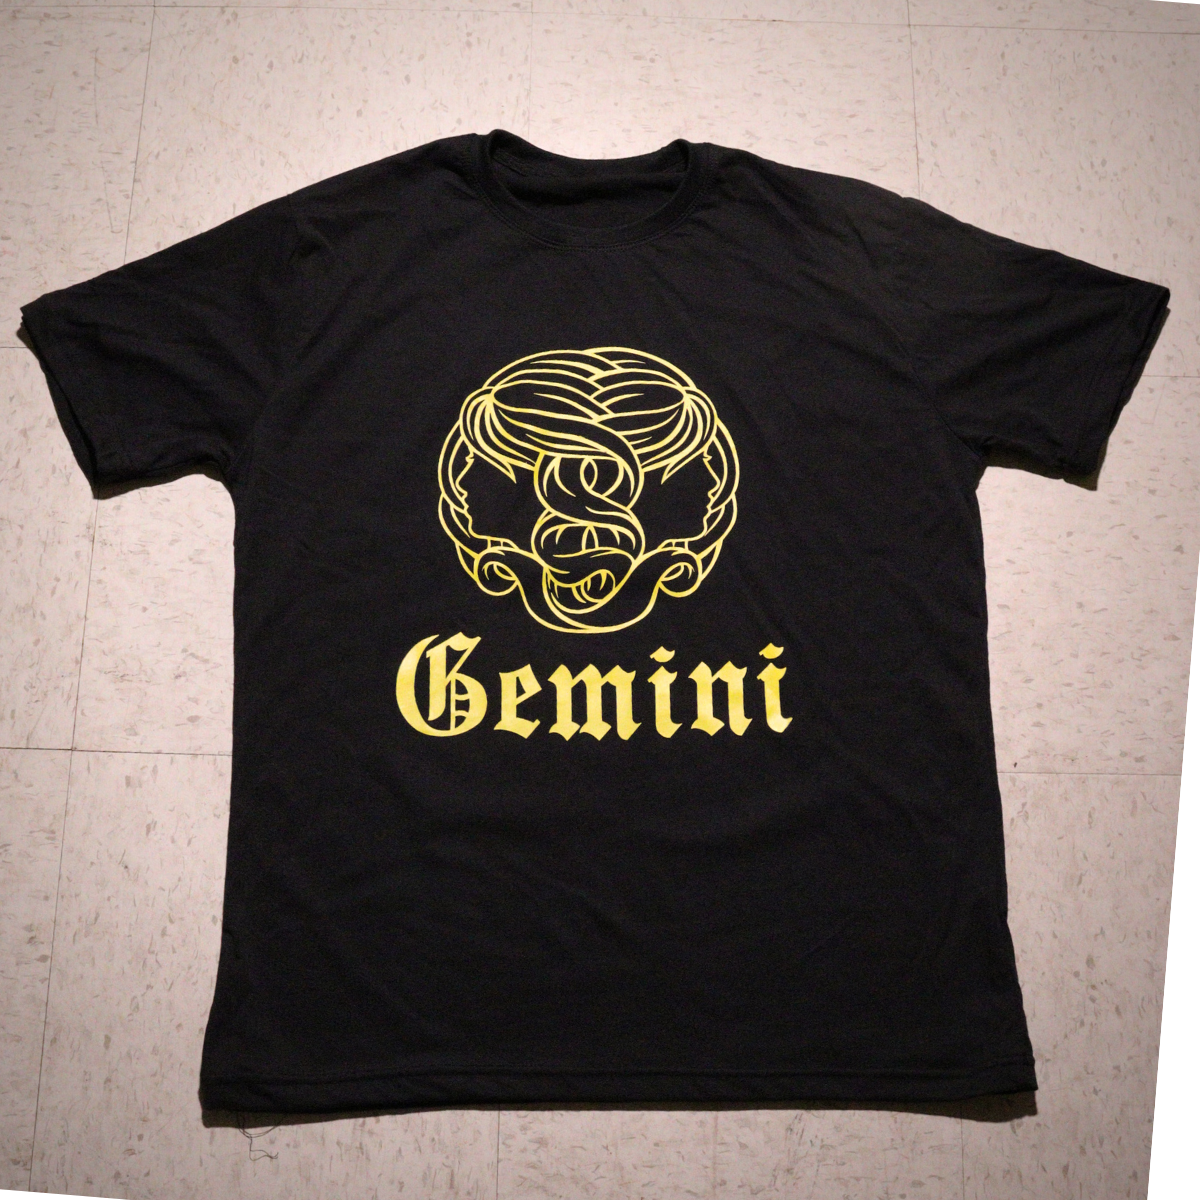 Gemini - Black & Yellow T-Shirt